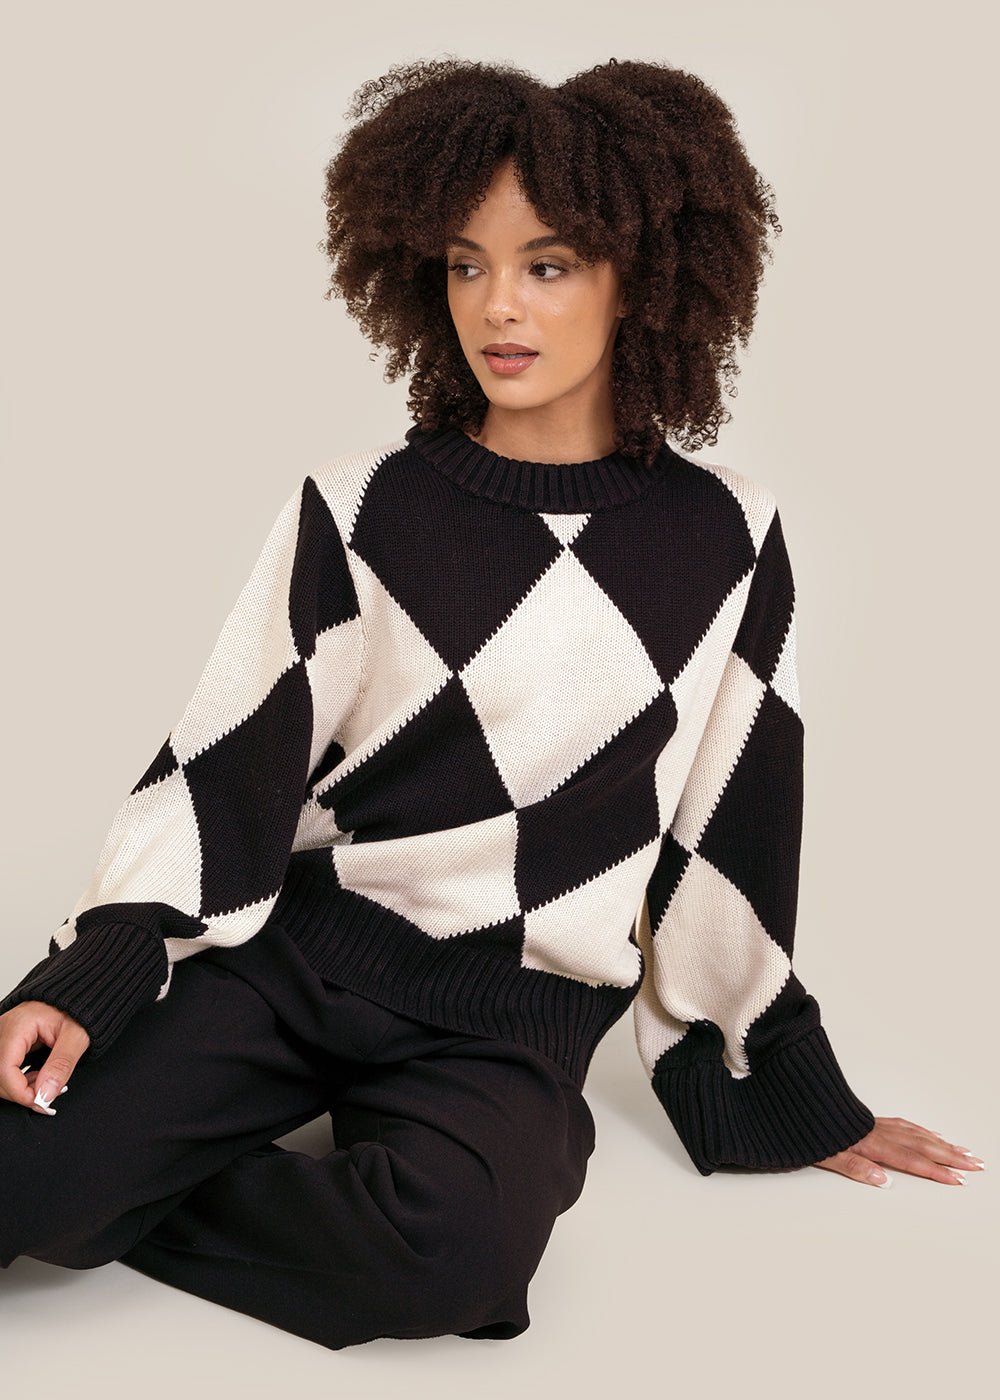 Stylein Black/White Aren Sweater - New Classics Studios Sustainable Ethical Fashion Canada